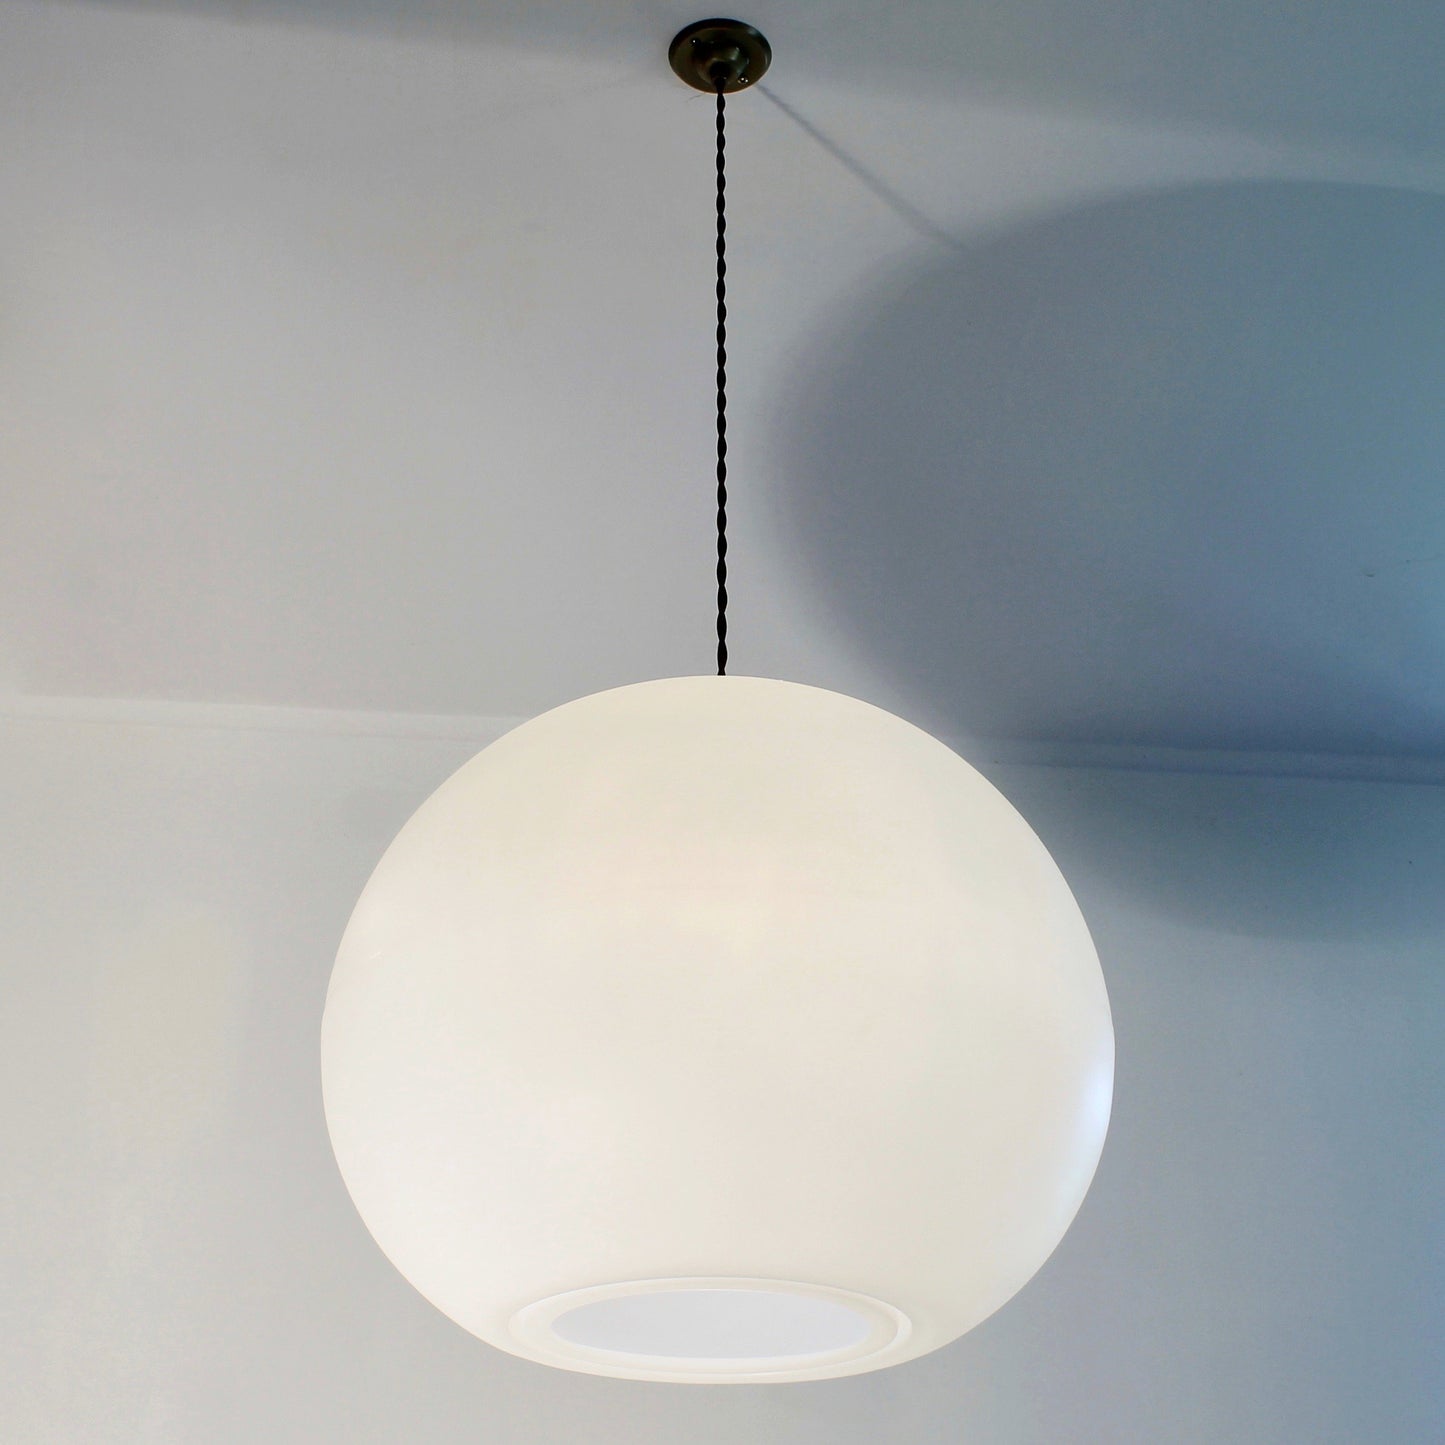 modern globe pendant lighting, contemporary elegant lighting, white lights, calm lighting, kitchen dining suspension, living room lighting